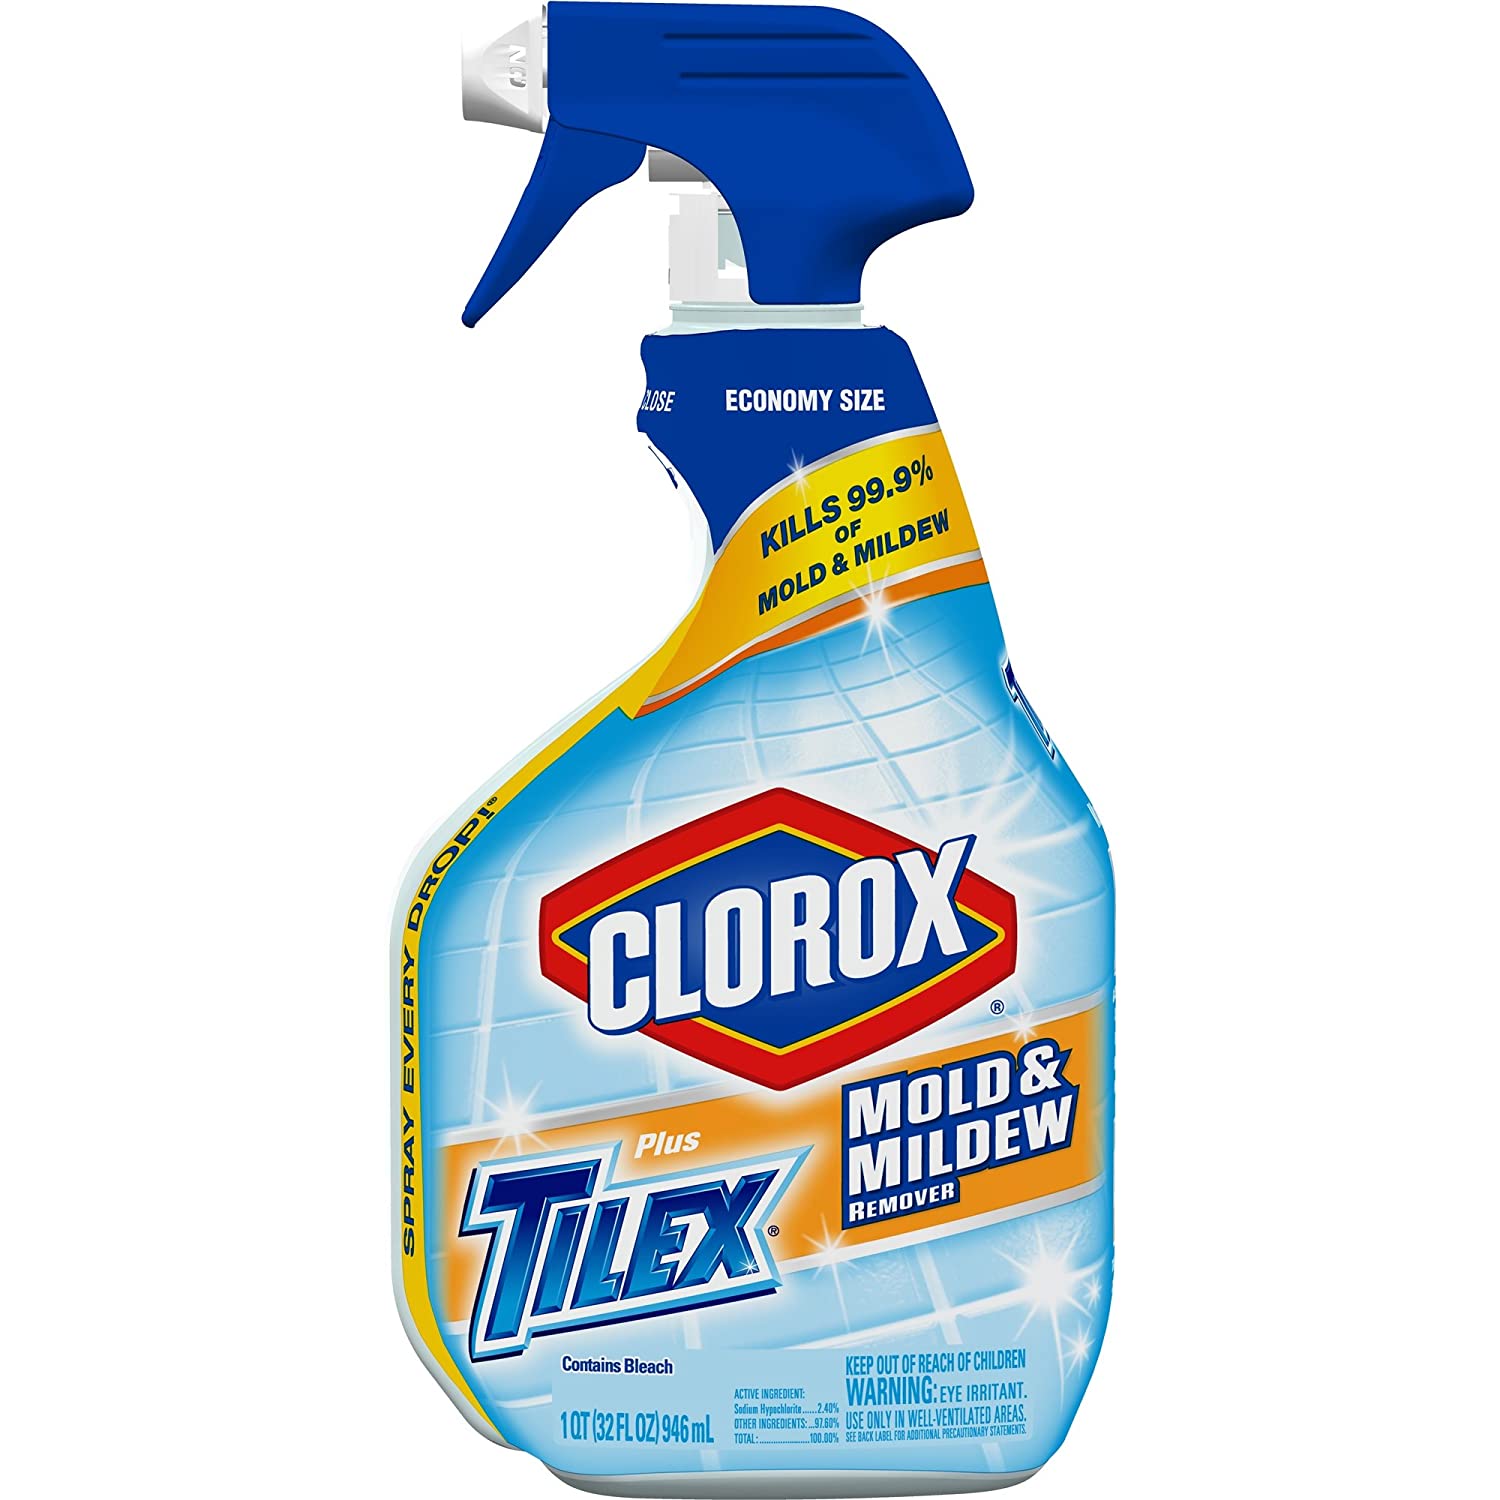 Clorox Plus Tilex Mold and Mildew Remover Spray Bottle, 32 OZ